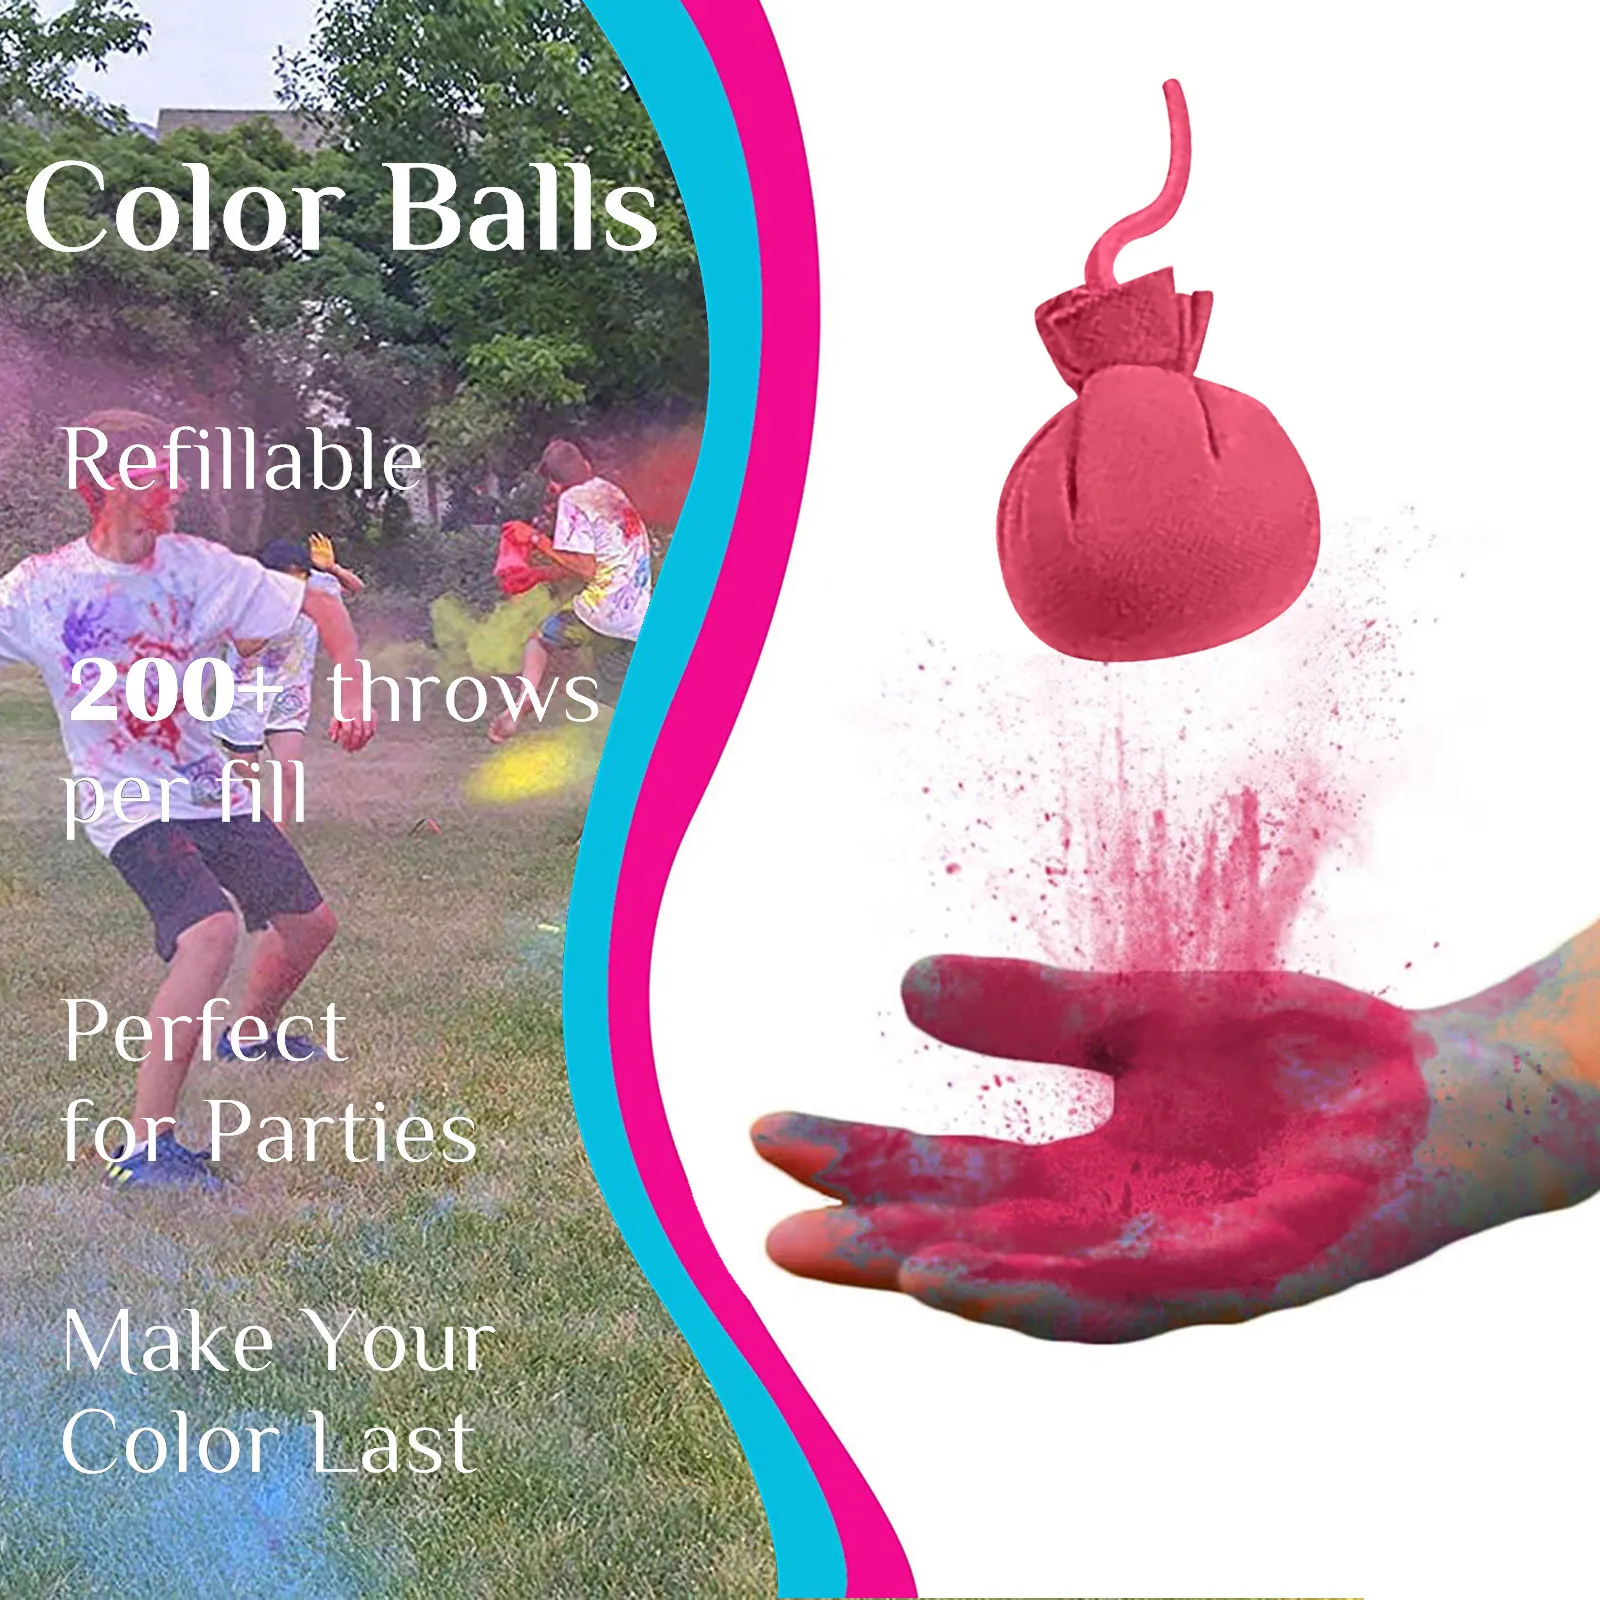 https://ae01.alicdn.com/kf/S3839f4aa30274499bb5ce2214a4a962dL/Party-Color-Powder-Balls-Refillable-Holi-Color-Balls-Combine-Color-Powder-Fun-Party-Throwing-Atmosphere-Supplies.jpg